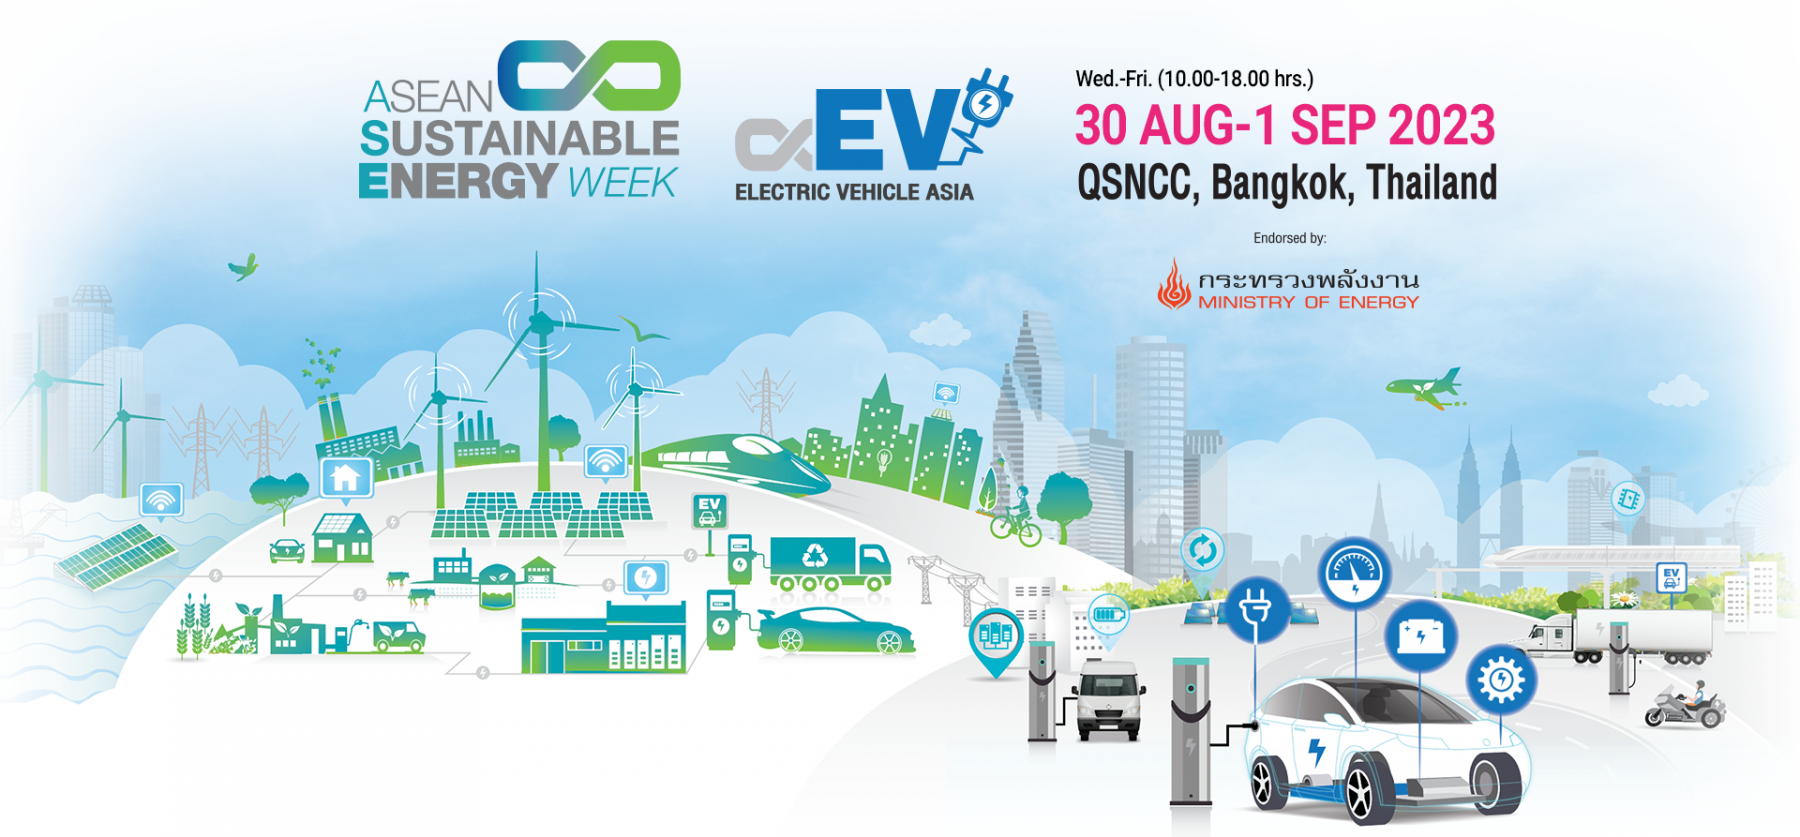 ASEAN Sustainable Energy Week 2023 Novotel Bangkok Silom Road